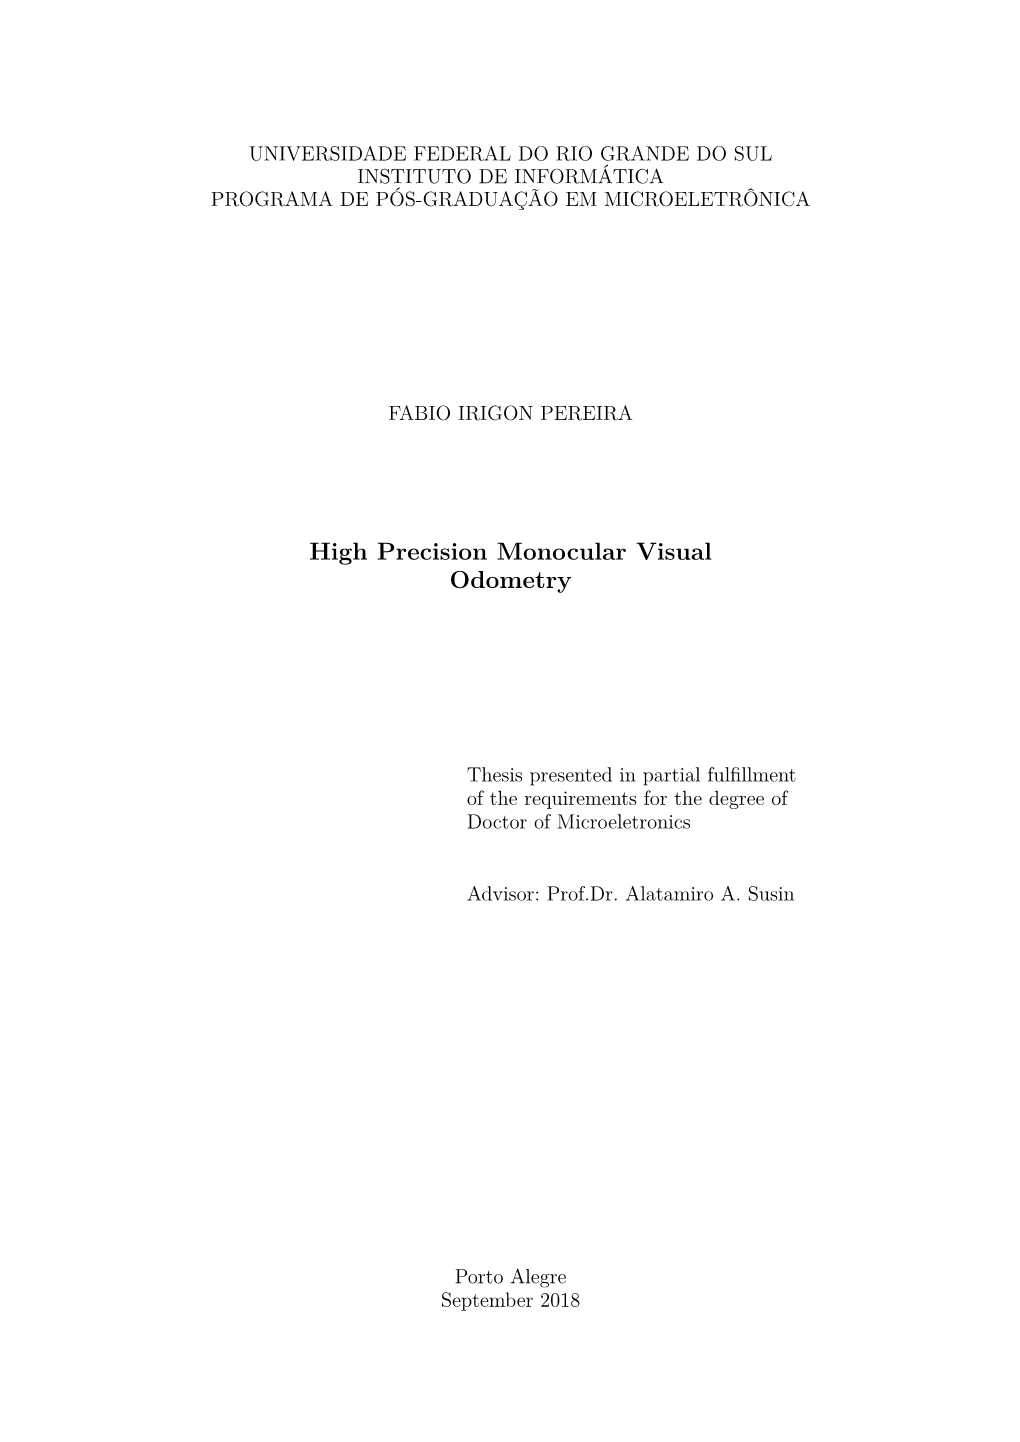 High Precision Monocular Visual Odometry